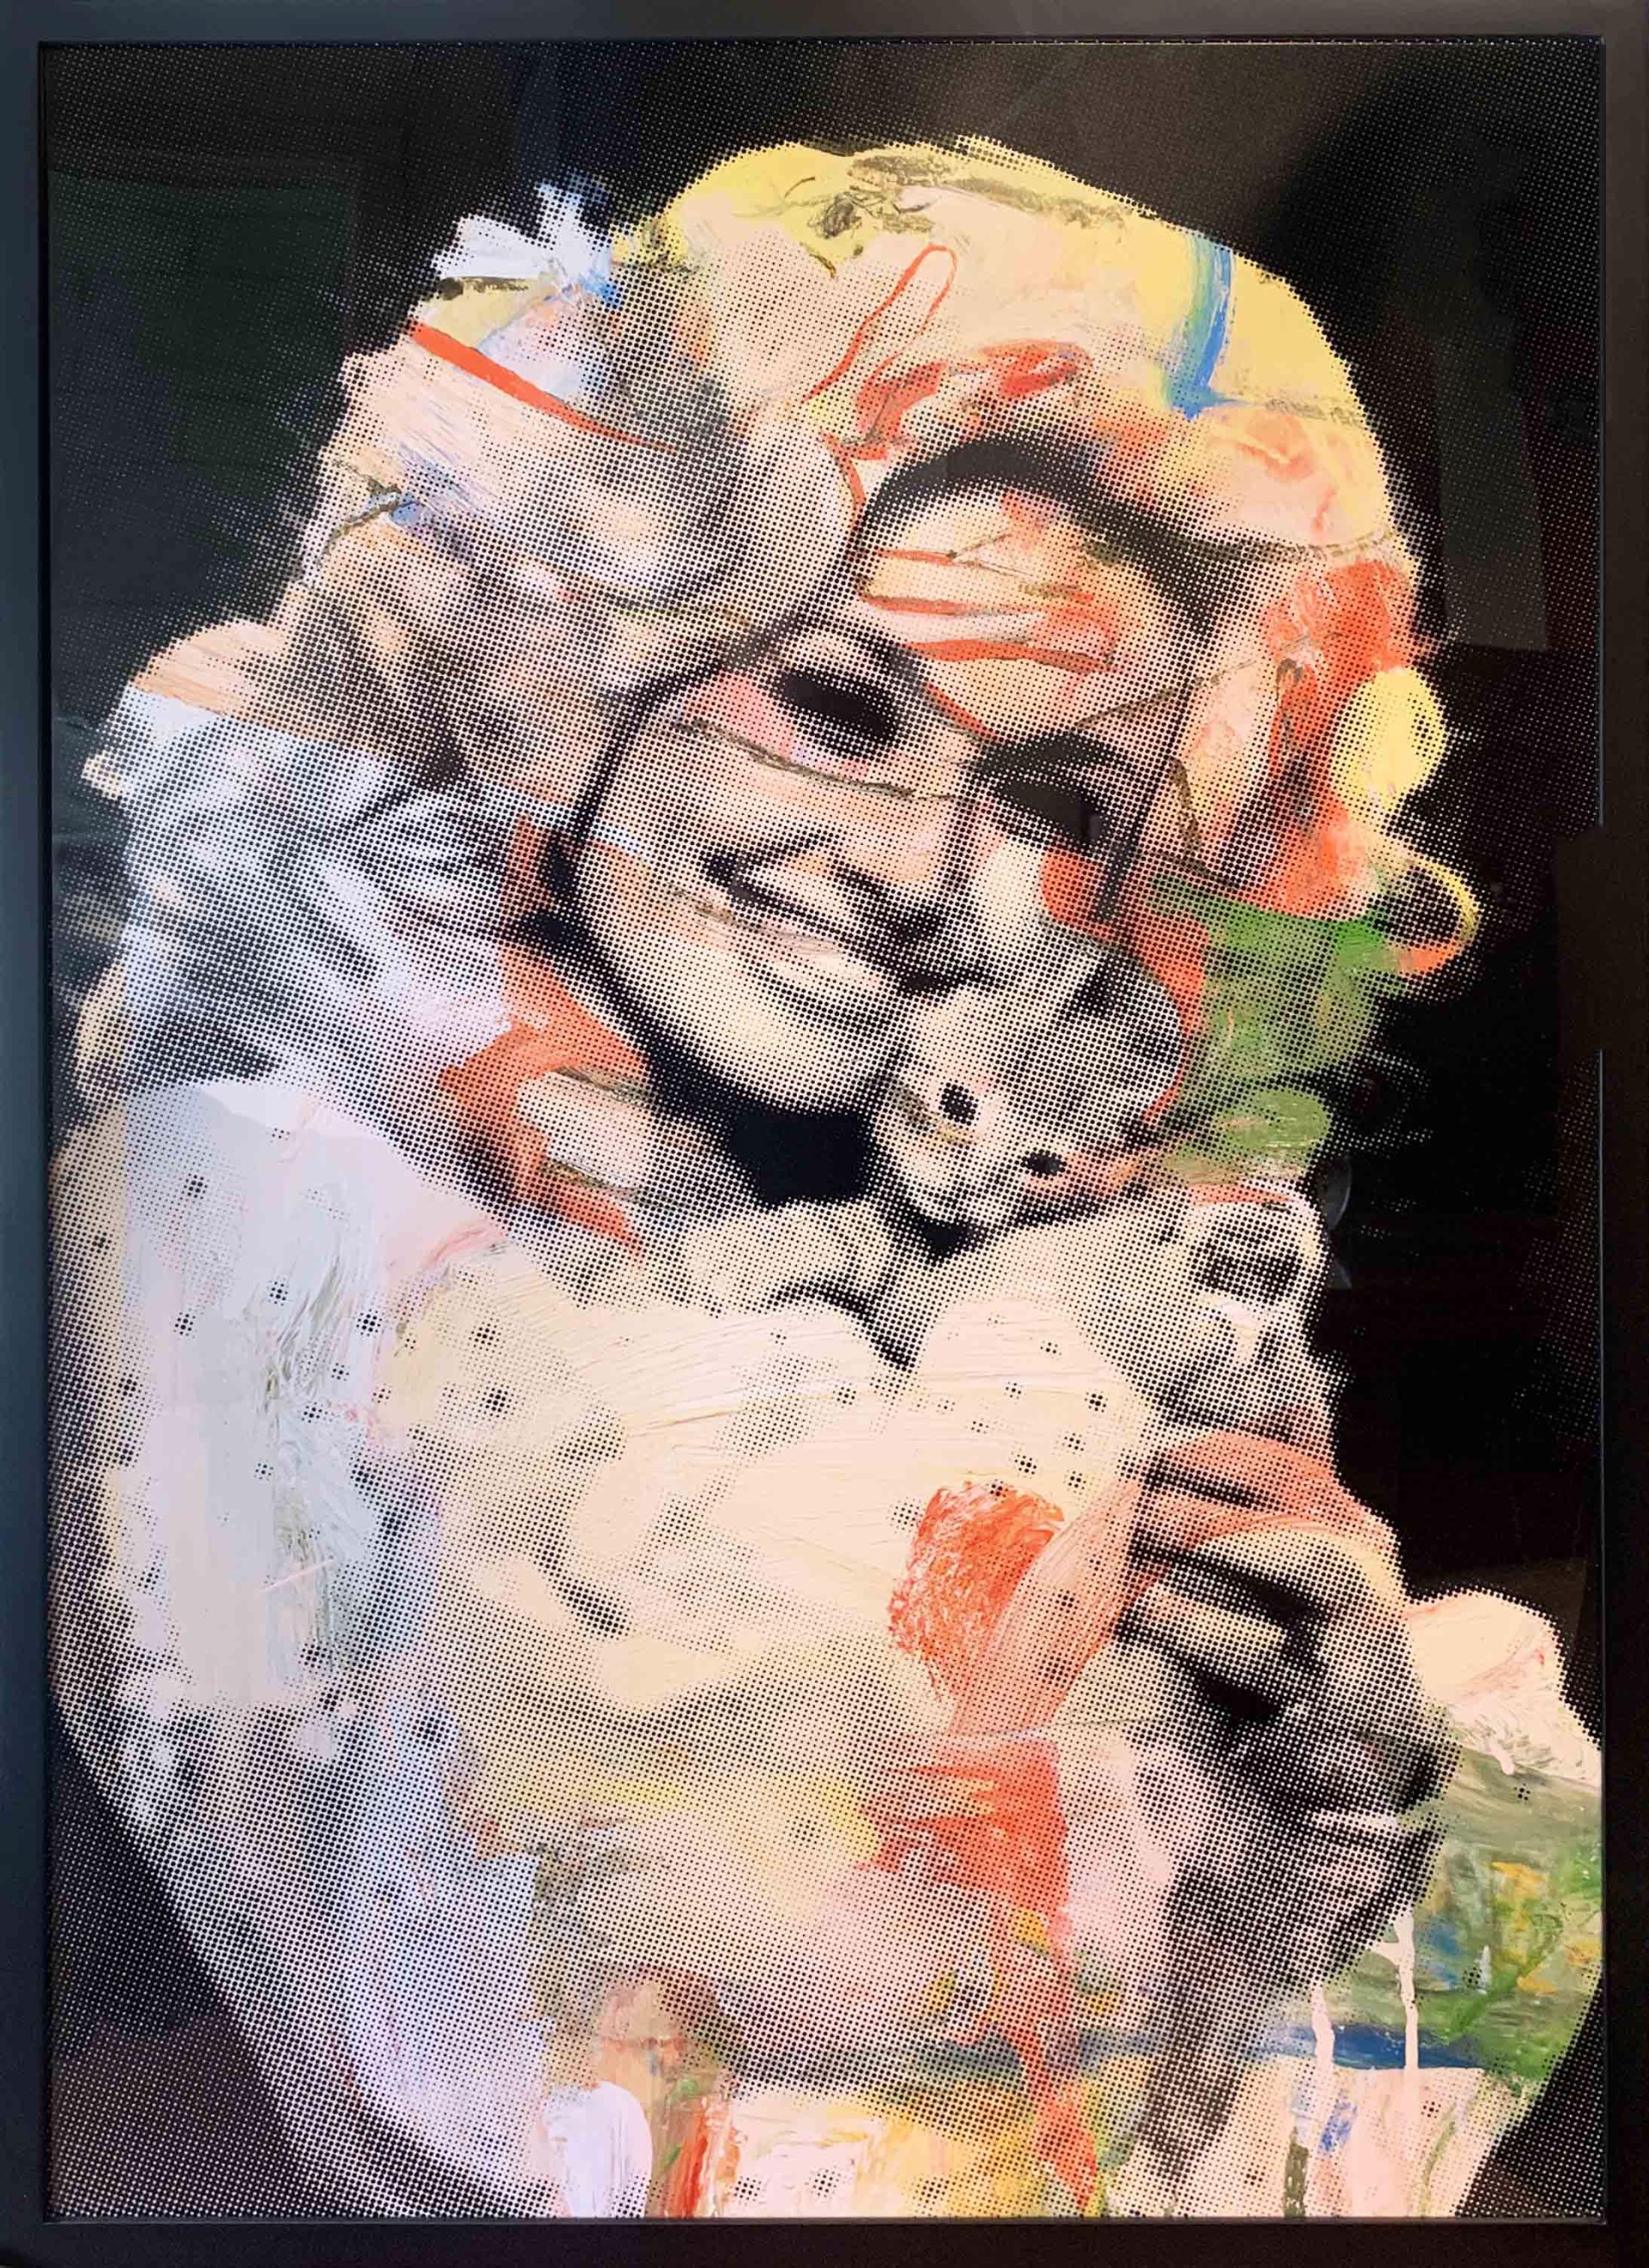 Dolly with Kitten de Kooning by Michael Ray Nott